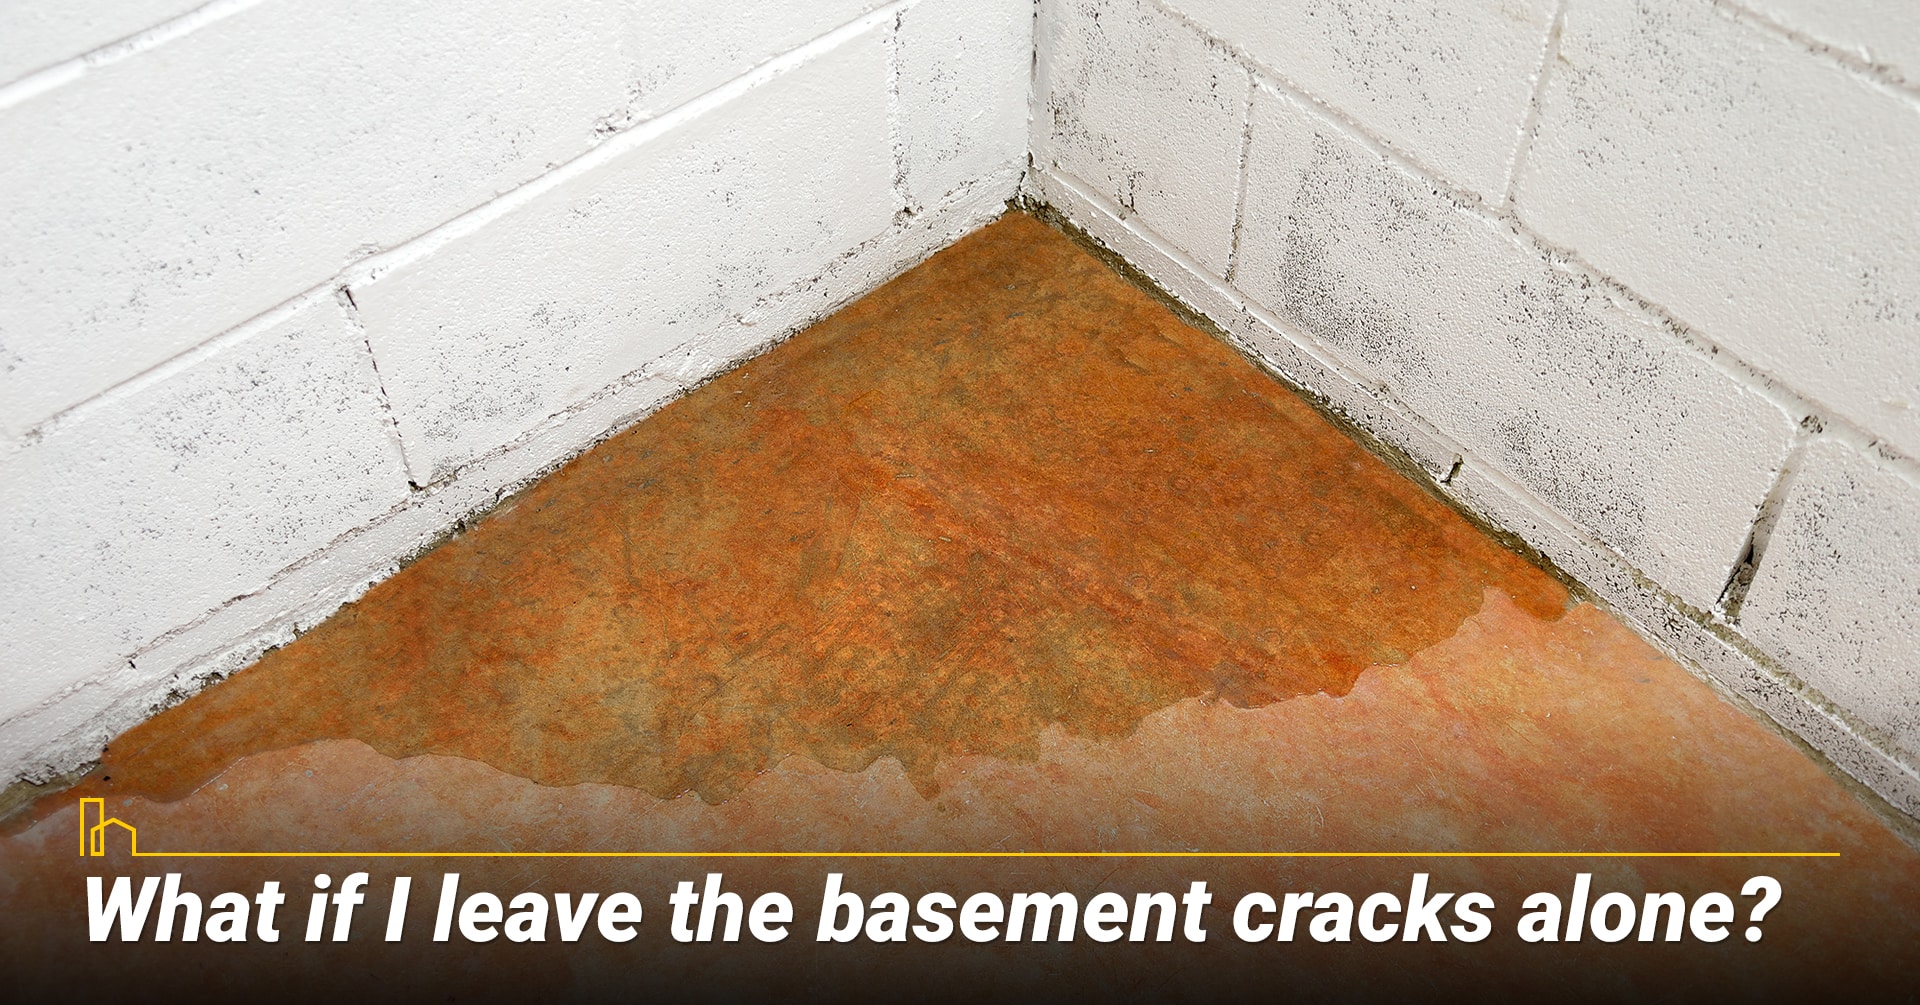 What if I leave the basement cracks alone?